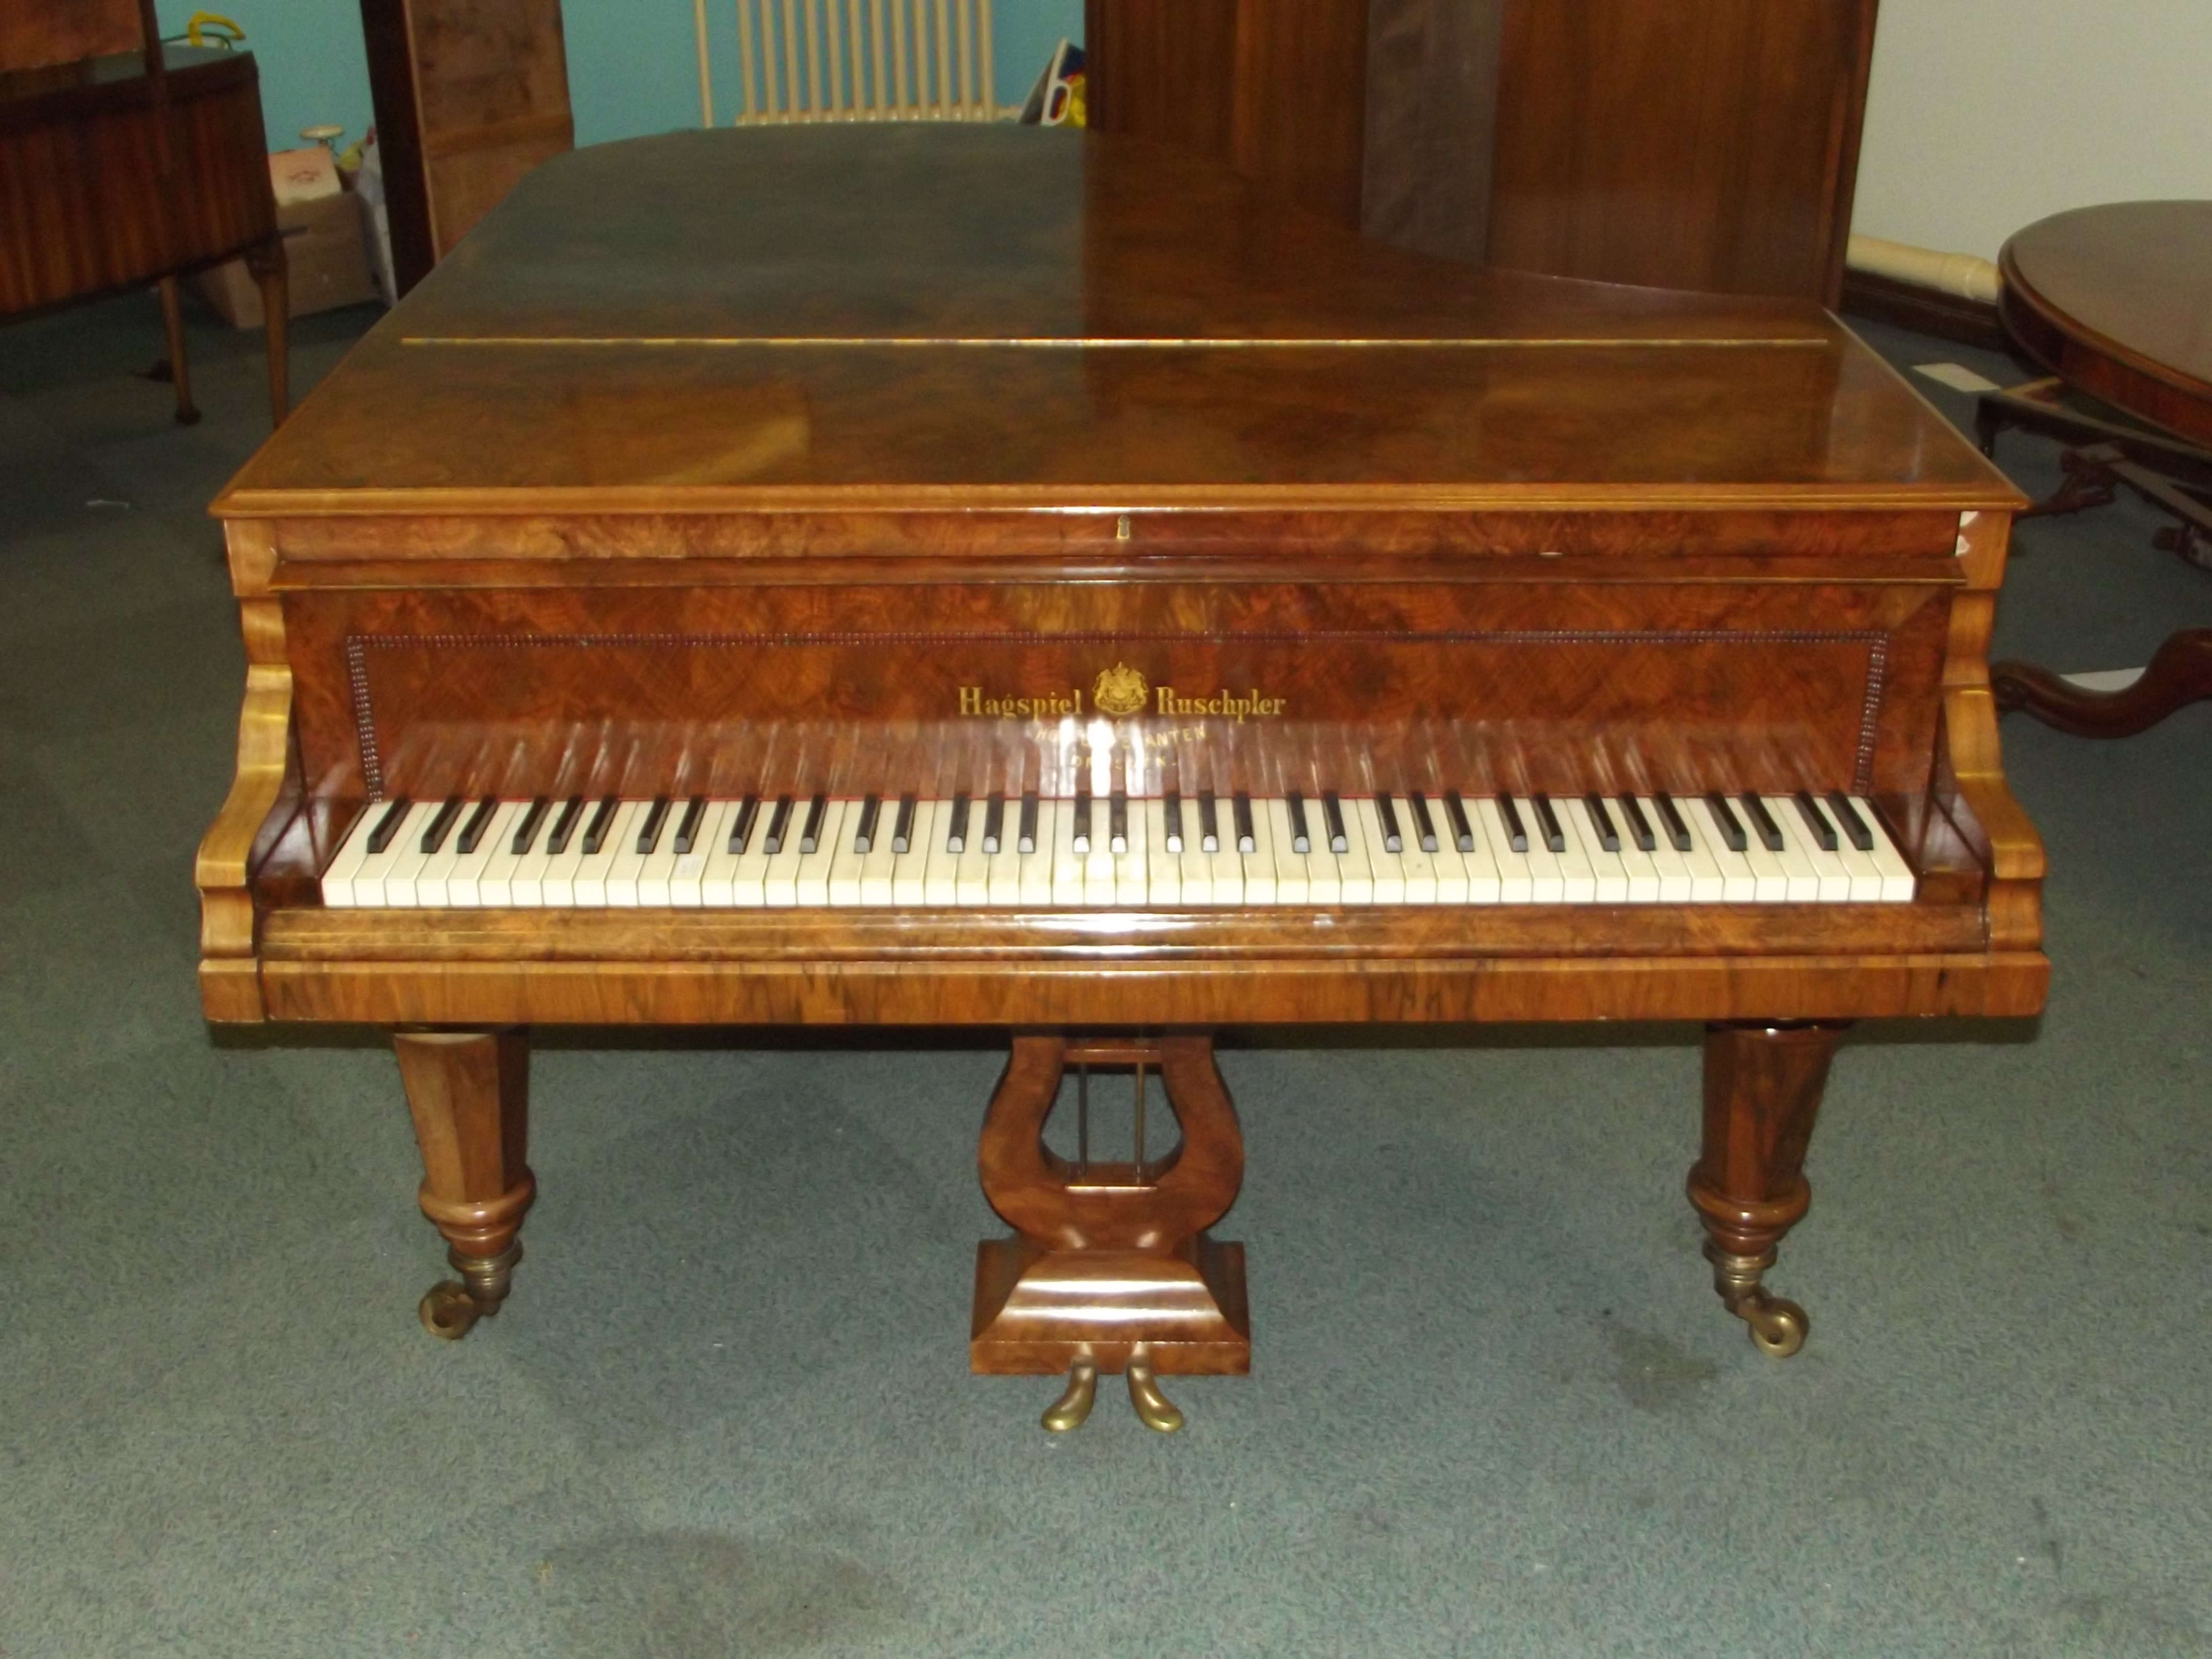 Hagspiel Ruschpler & Hof-Lieferanten Dresden walnut baby grand piano. Length 176 cm, width 137cm - Image 2 of 14